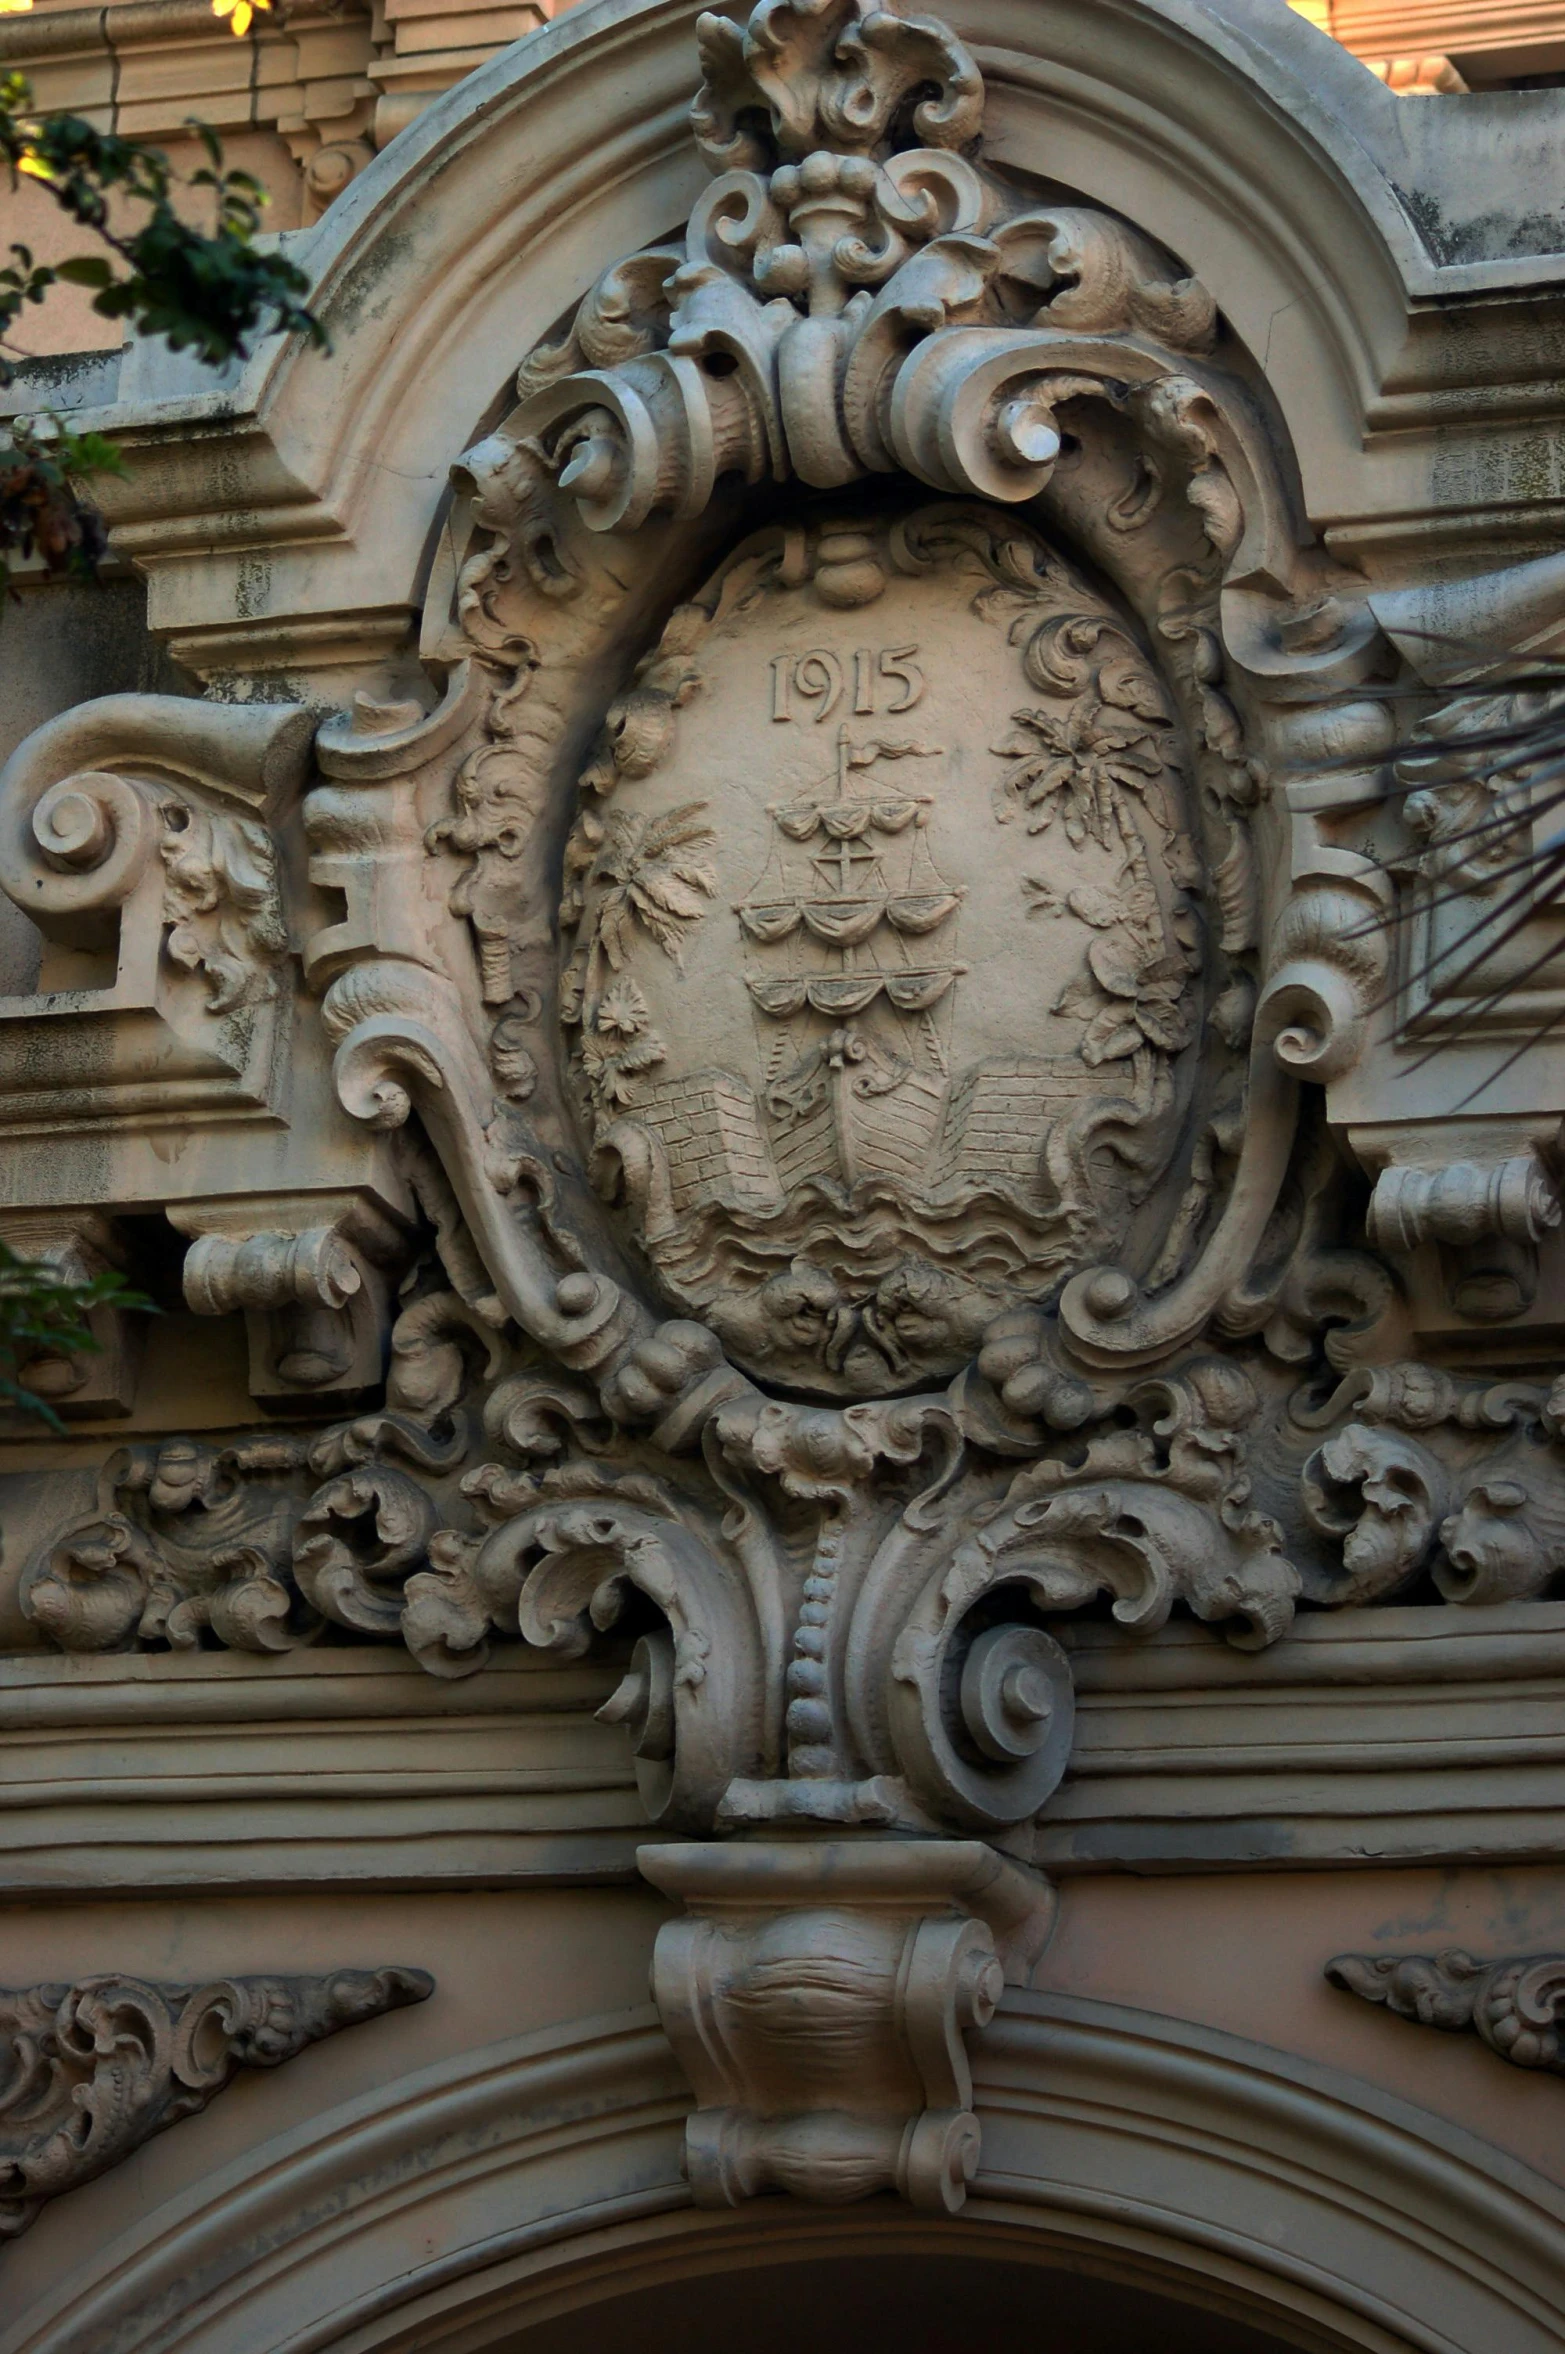 the decorative decoration of the architectural facade makes it unique